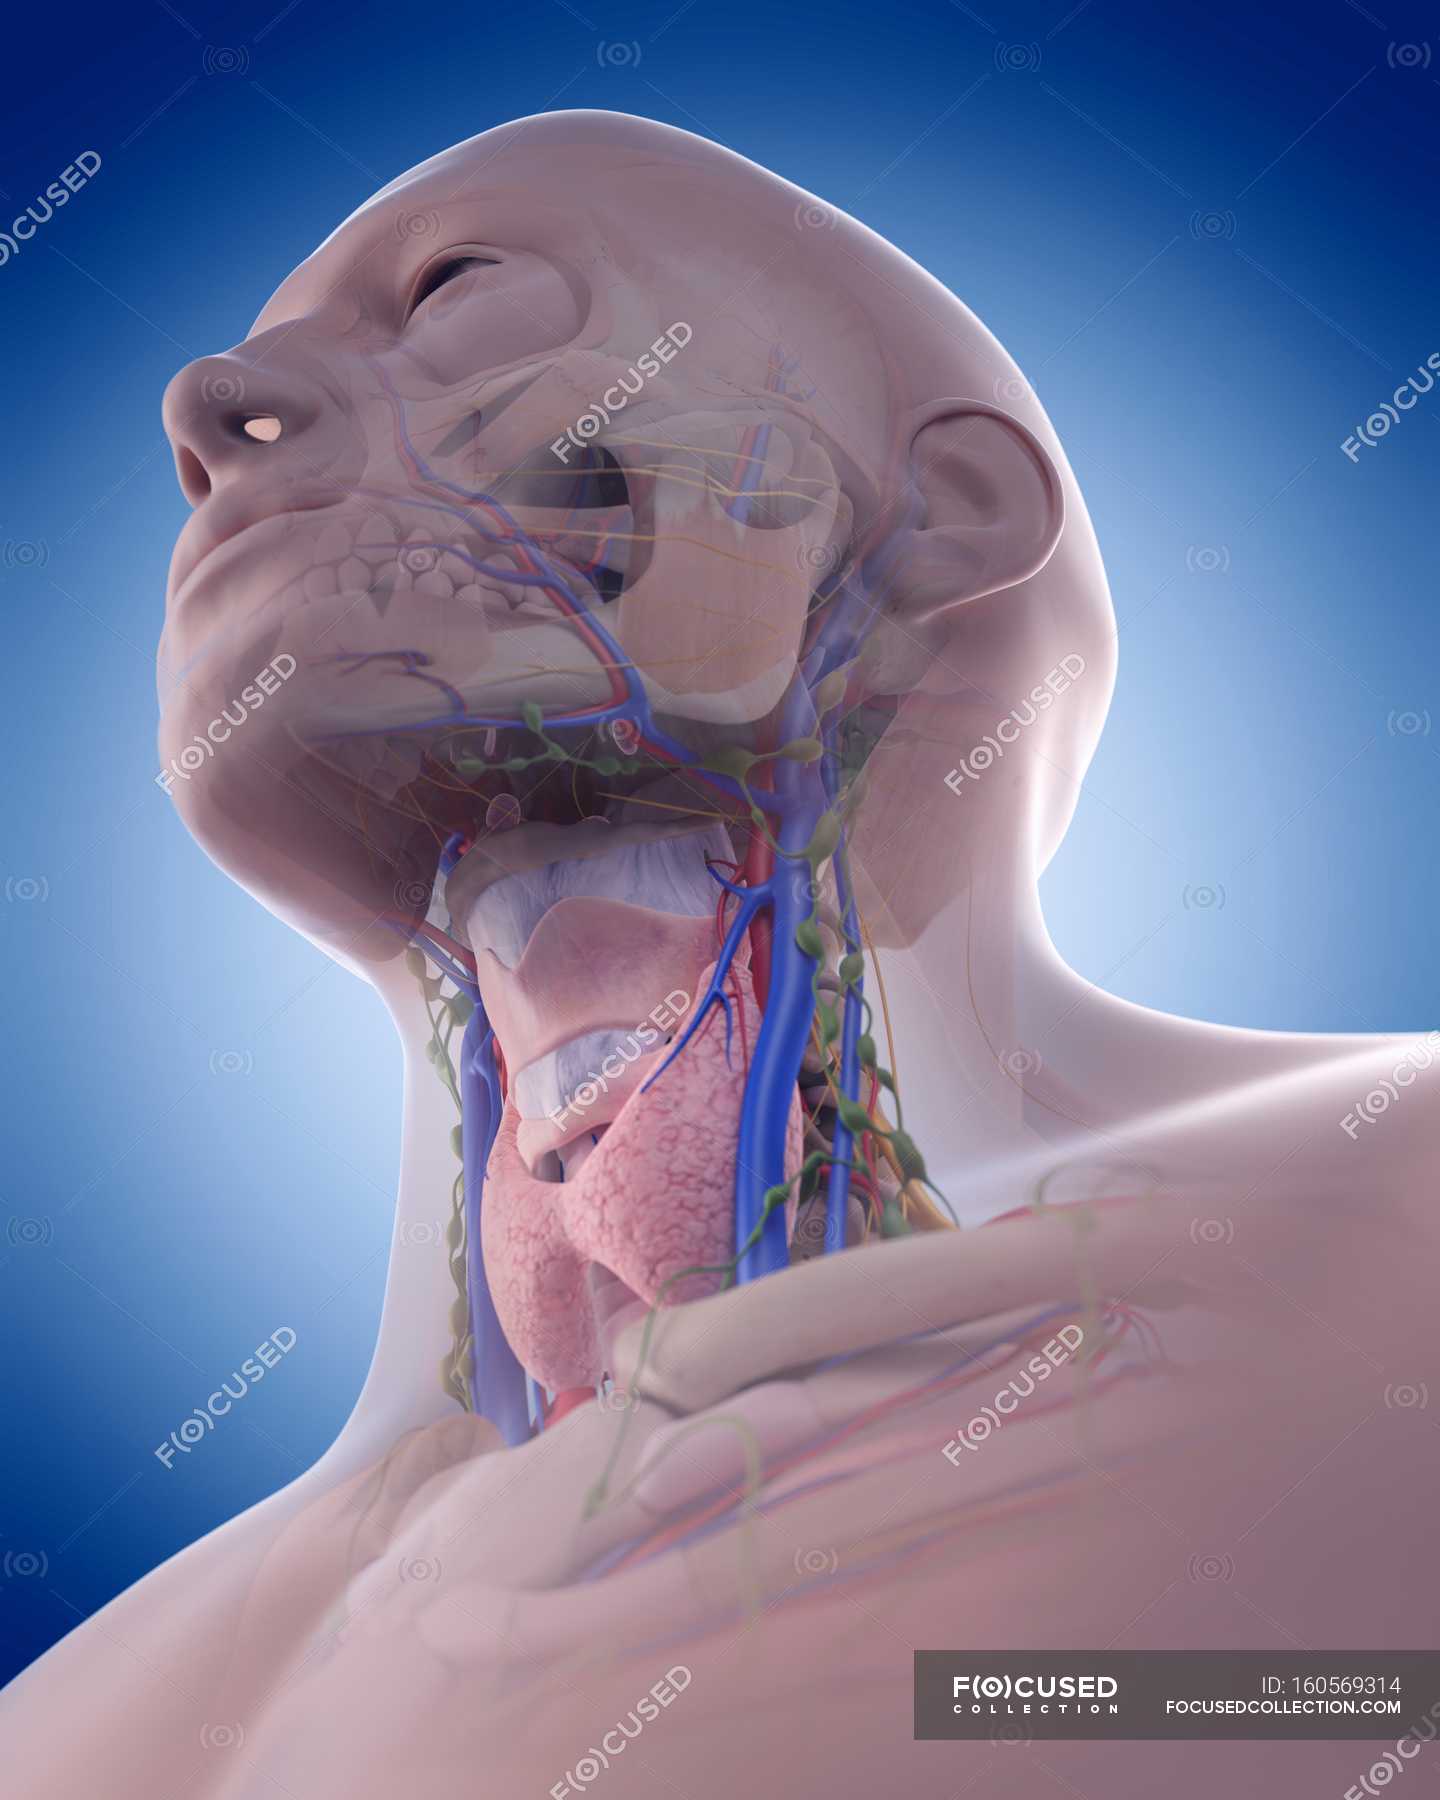 Anatomy of human neck — science, health - Stock Photo | #160569314